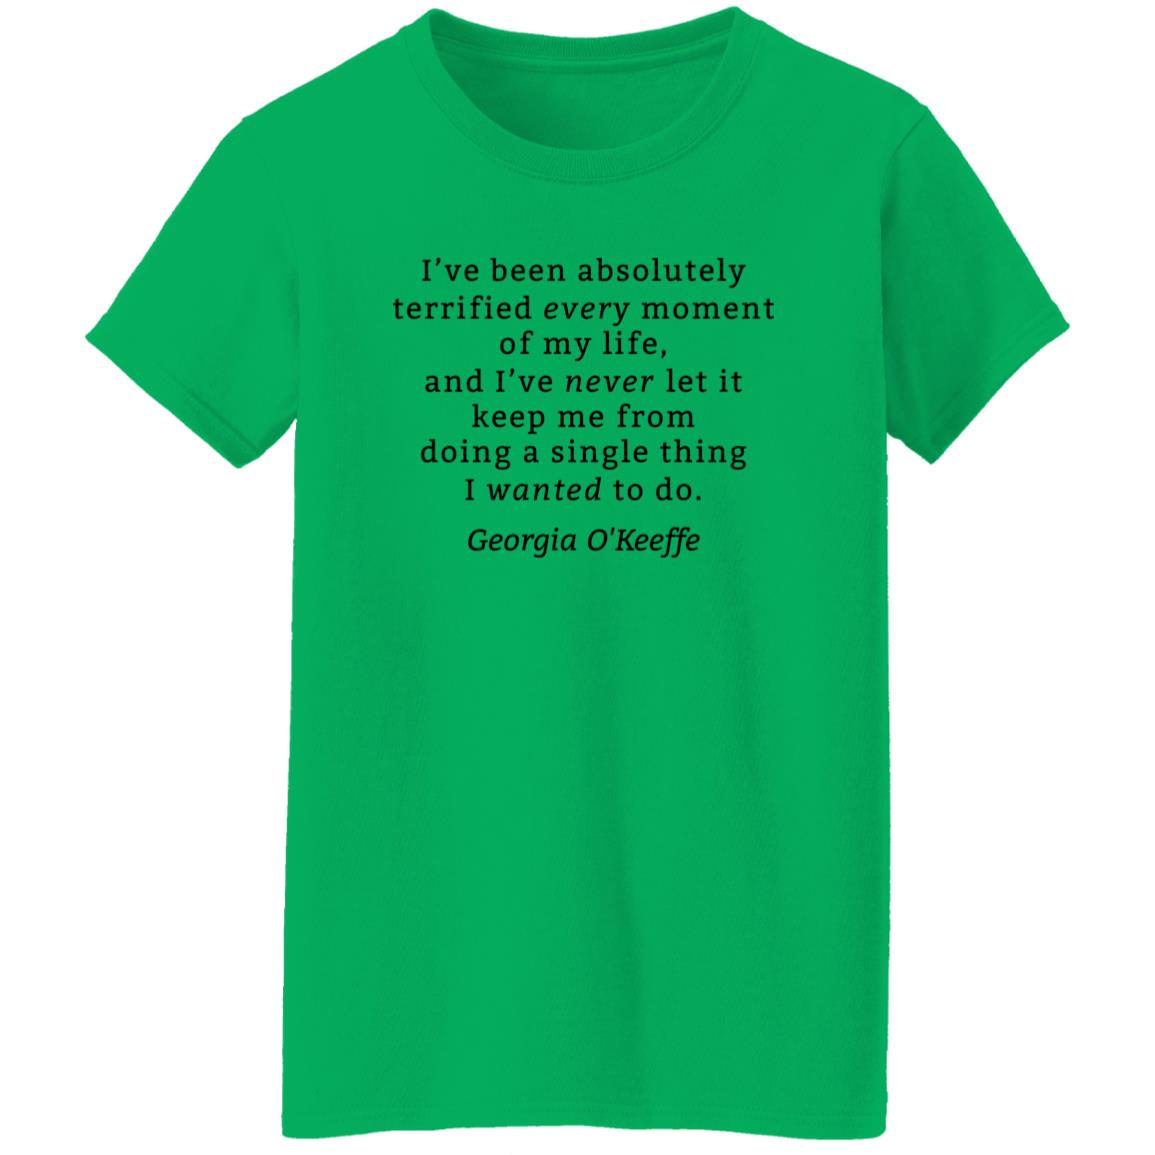 Georgia O'Keeffe T-Shirt